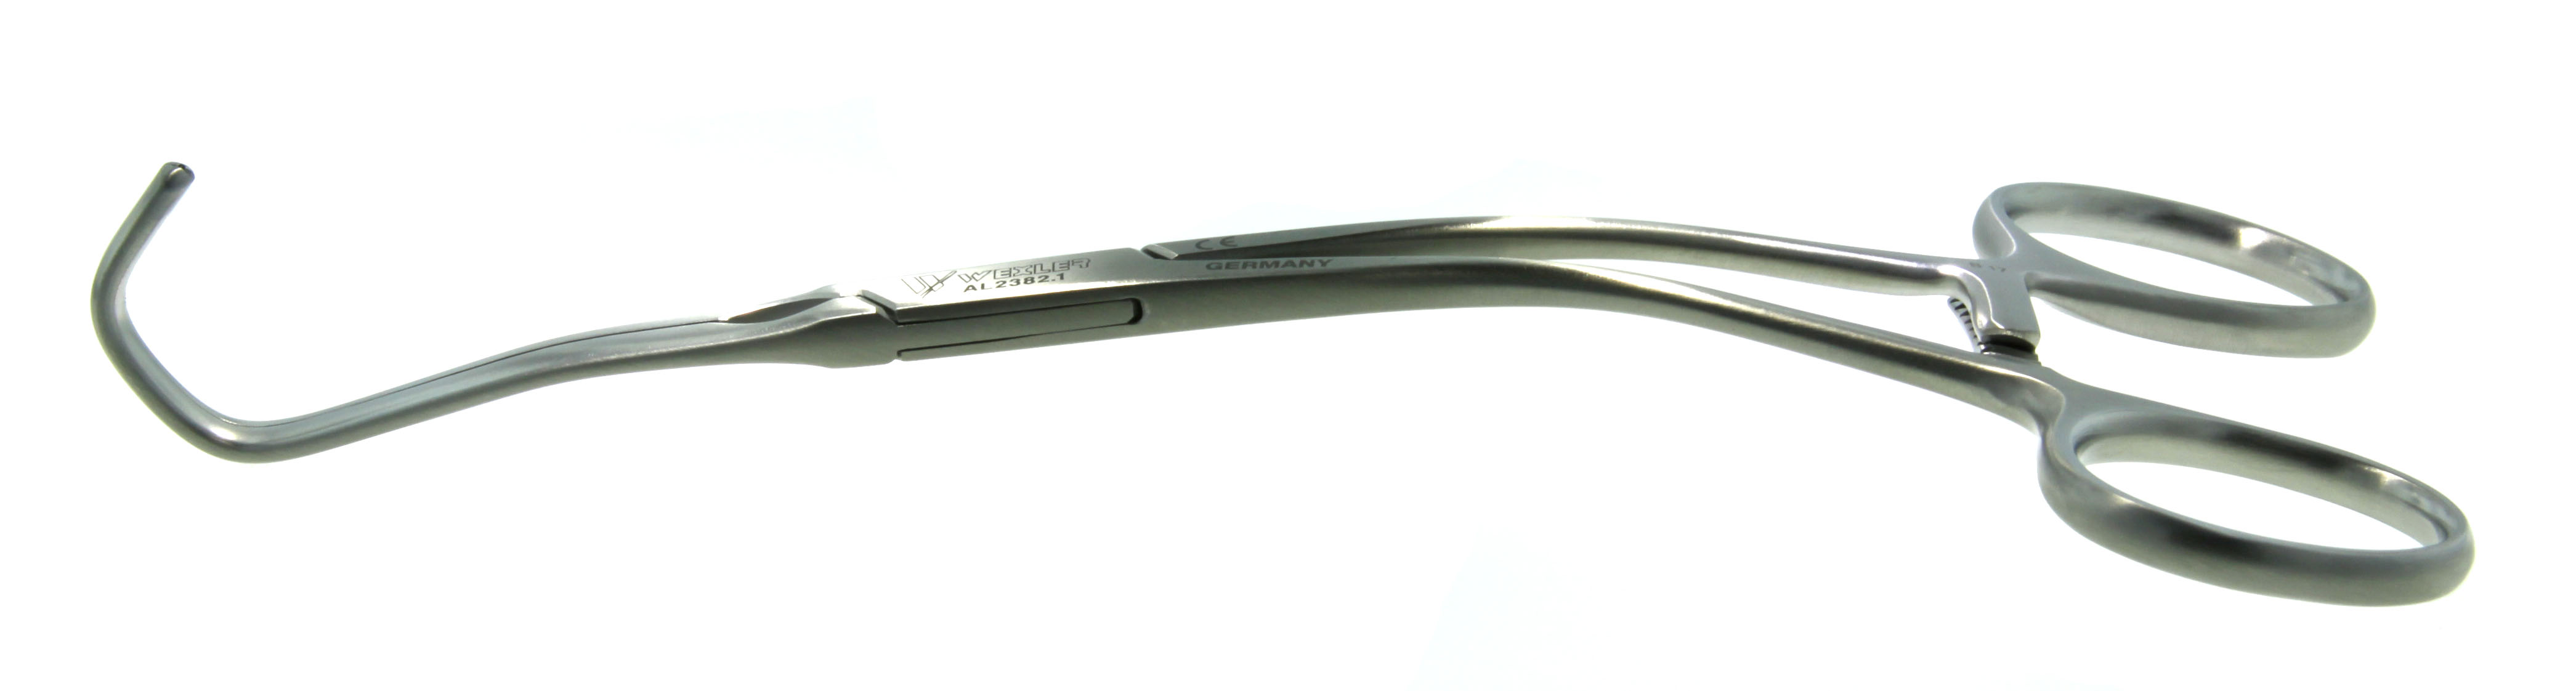 Wexler Anastomosis Clamp - Angled DeBakey Atraumatic 15mm jaws